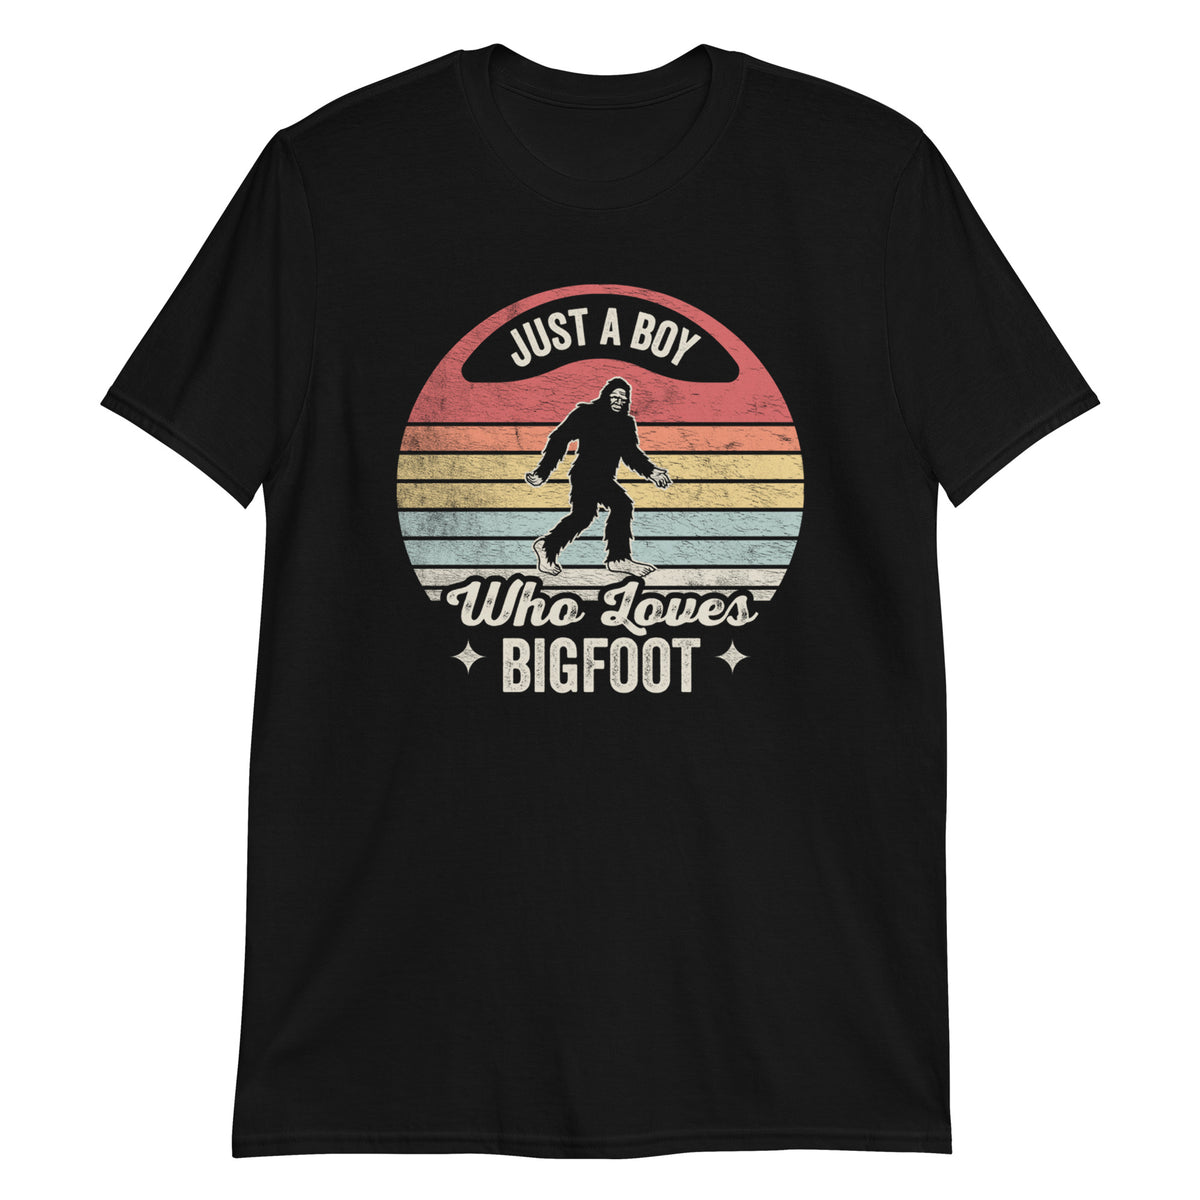 Just a boy who loves bigfoot Retro Vintage Unisex T-Shirt